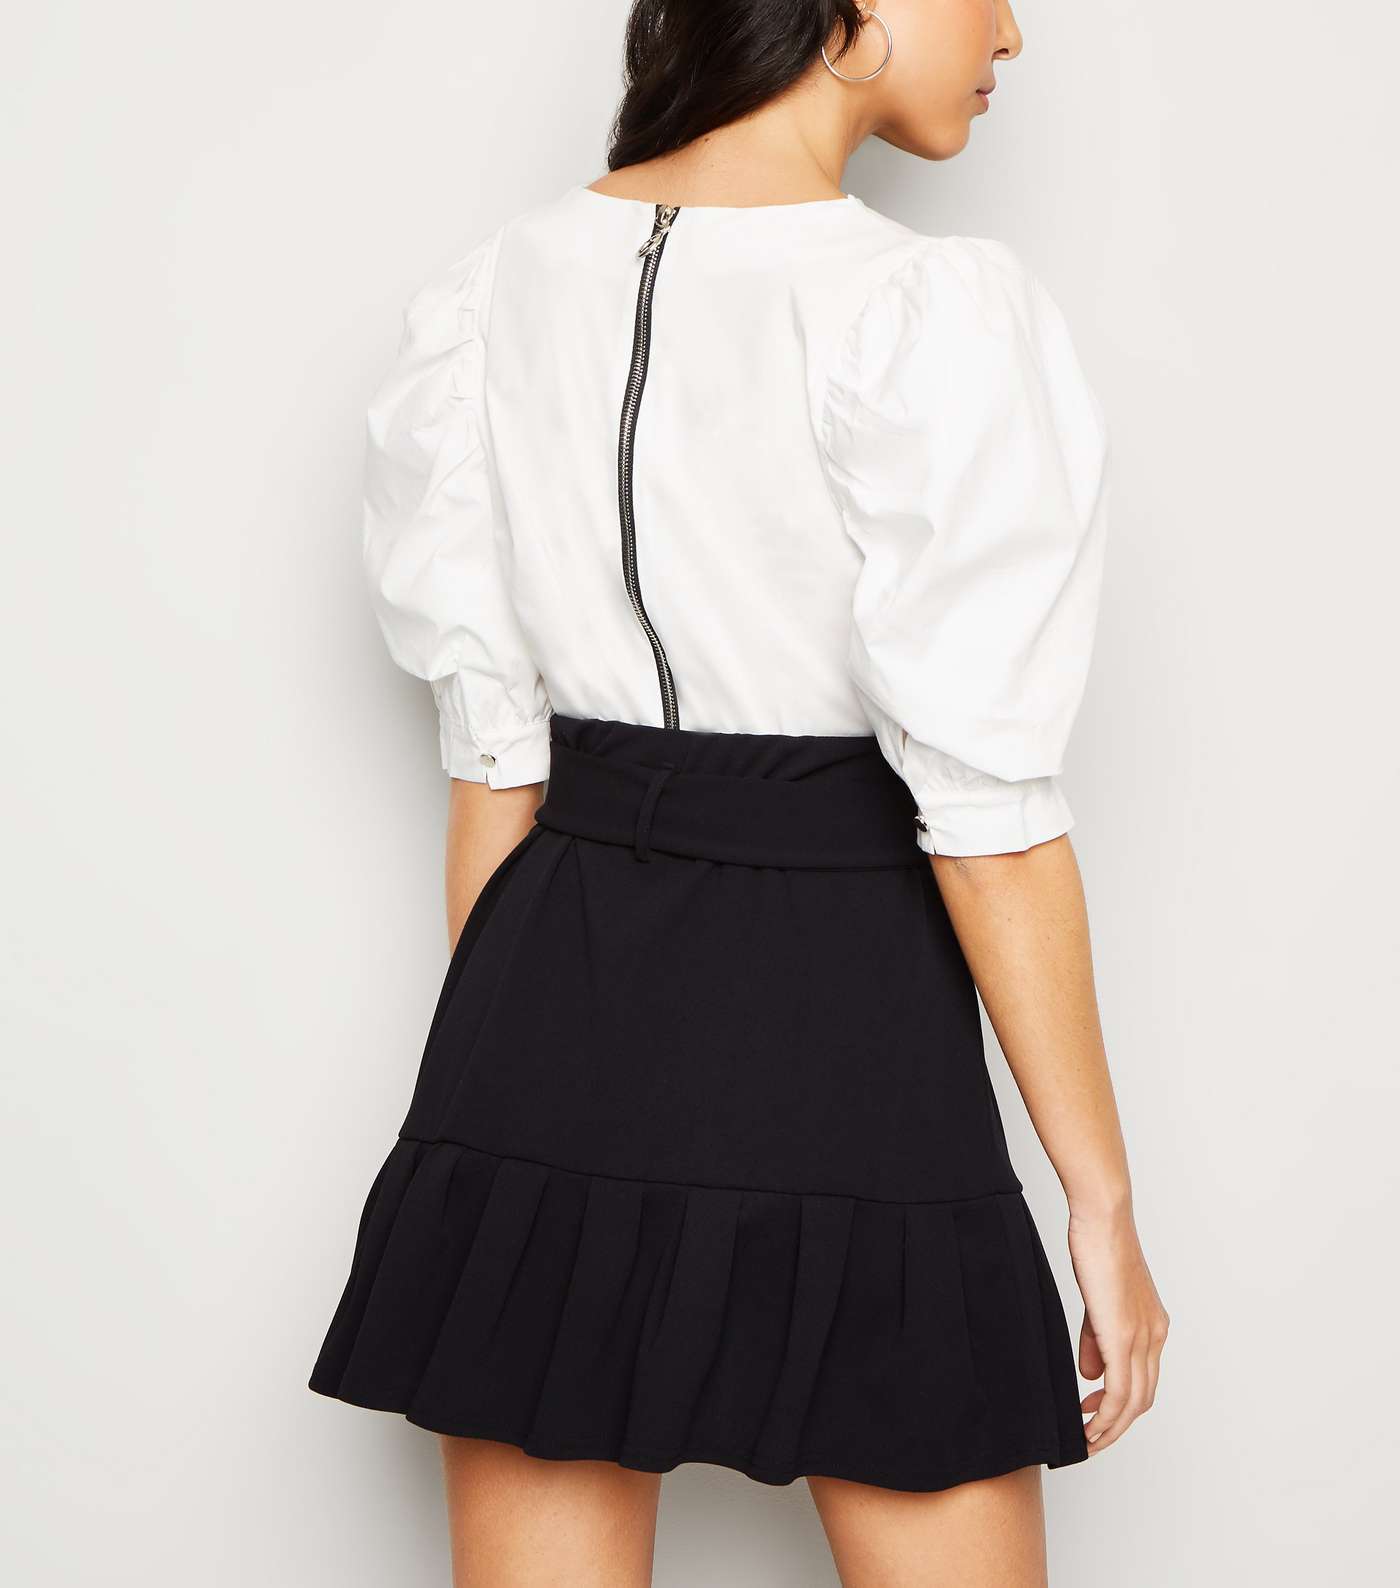 Cameo Rose Black Frill Trim Belted Skirt Image 3